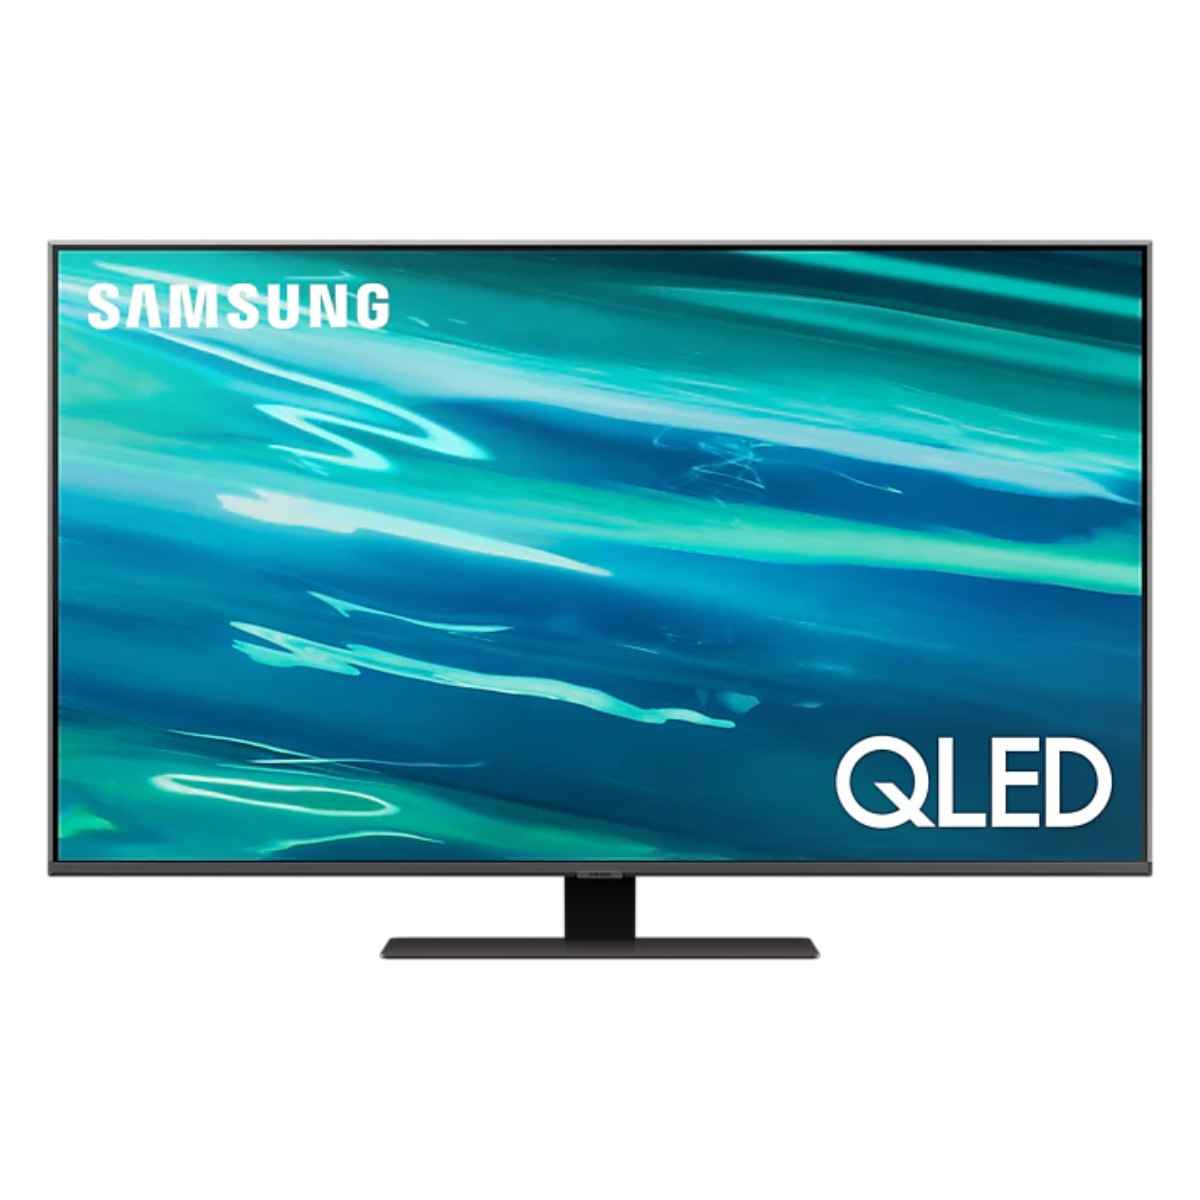 Samsung Q80A 55-inch 4K QLED TV